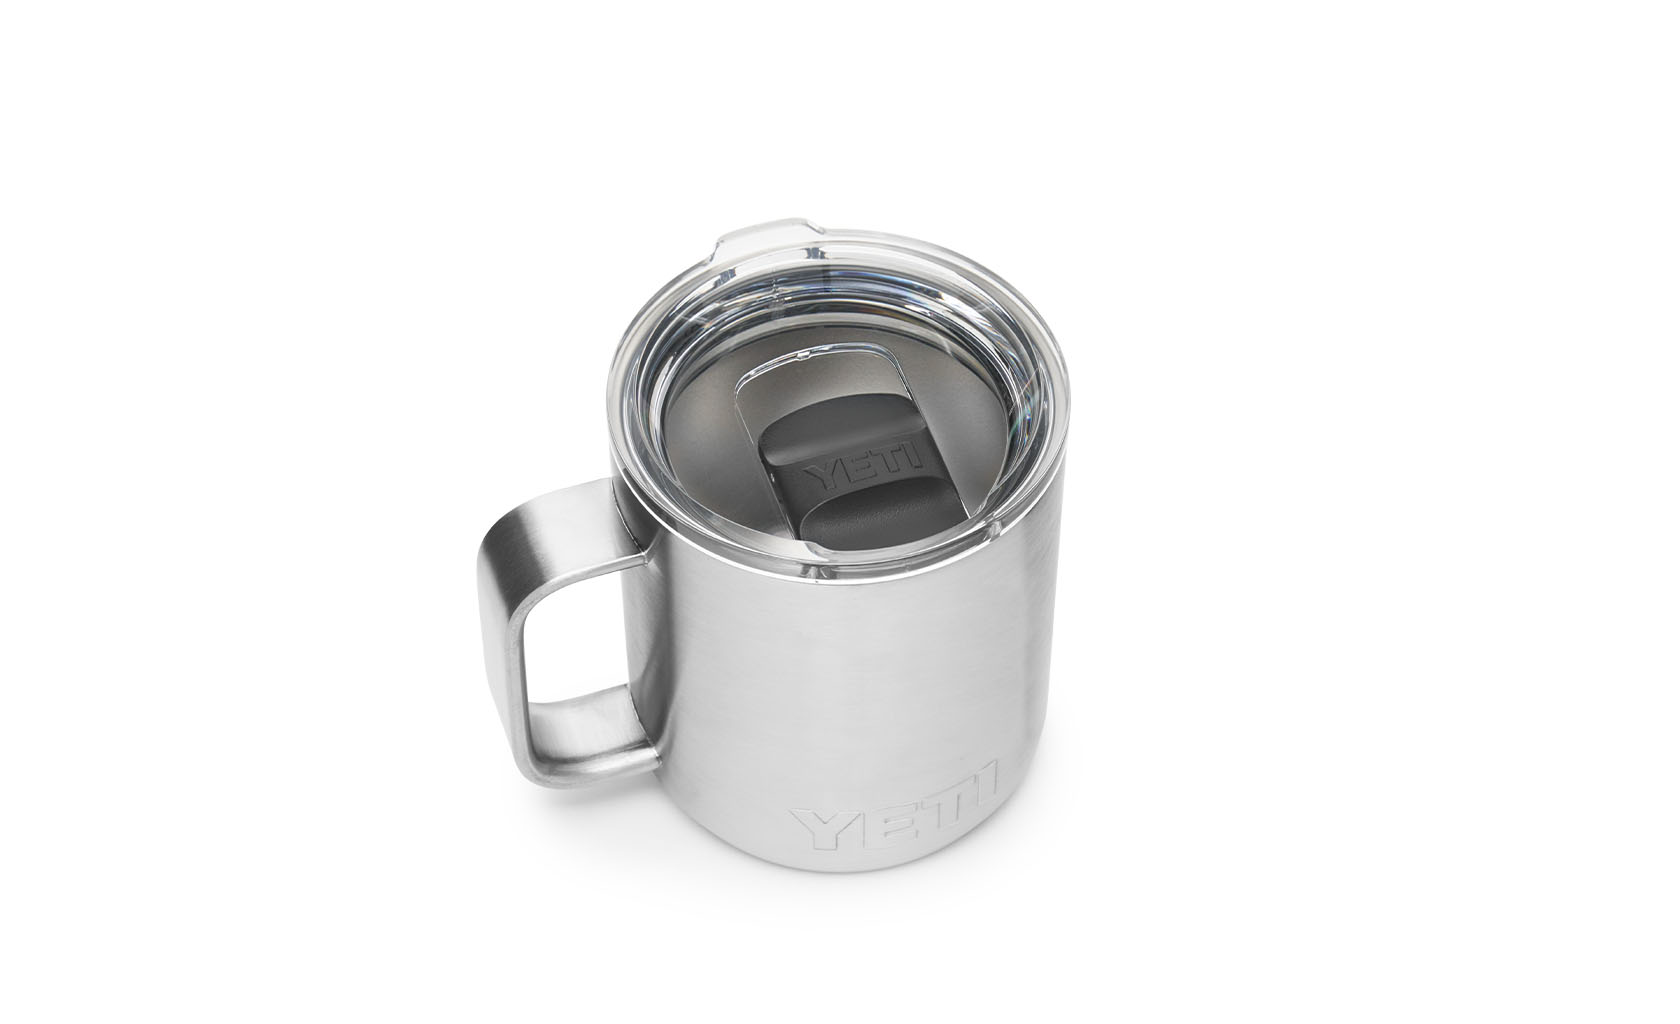 YETI on X: Meet the new Rambler 10 oz Stackable Mug. Its mission